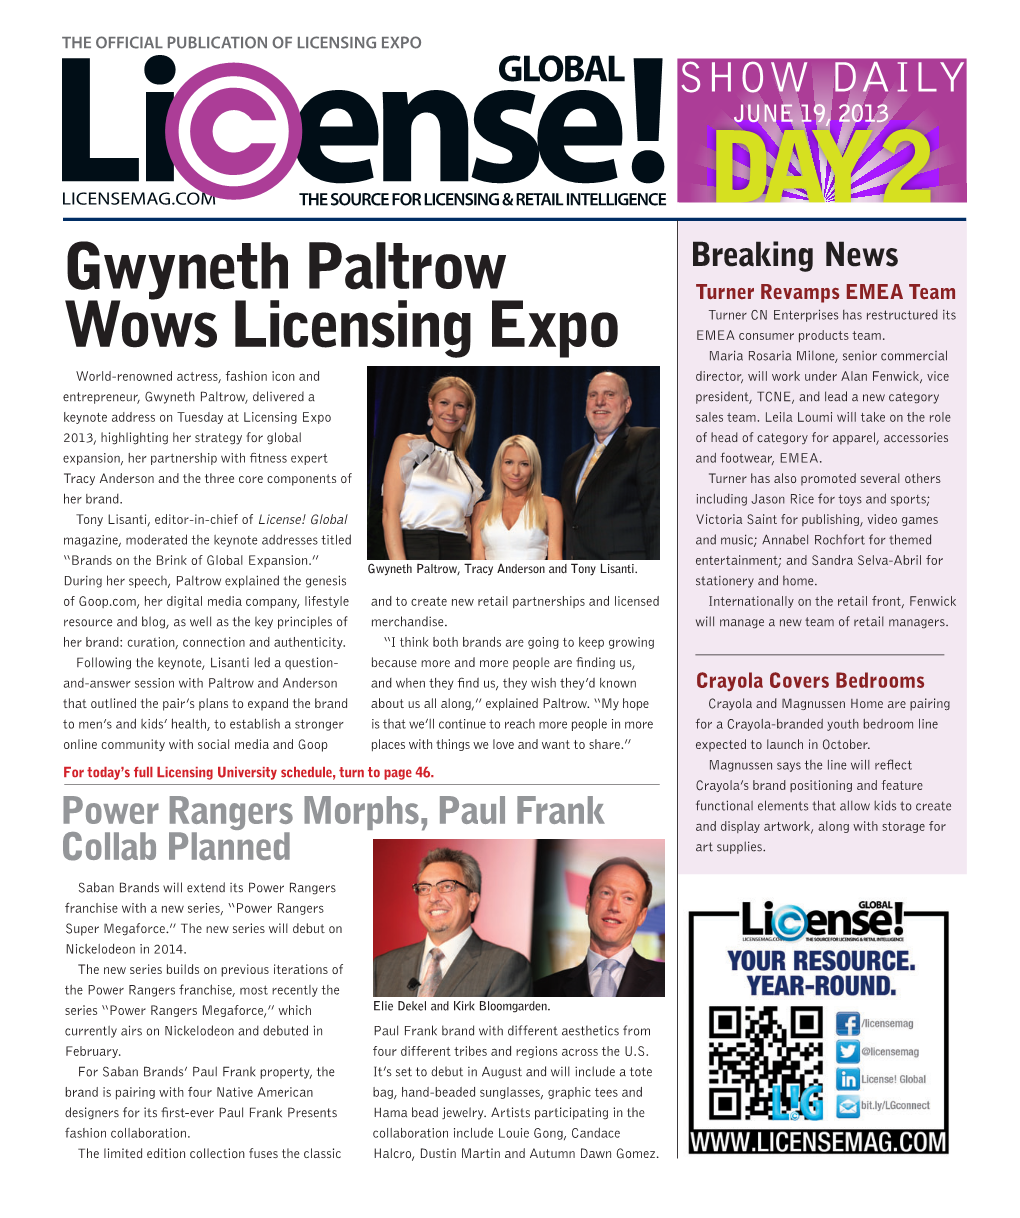 Gwyneth Paltrow Wows Licensing Expo